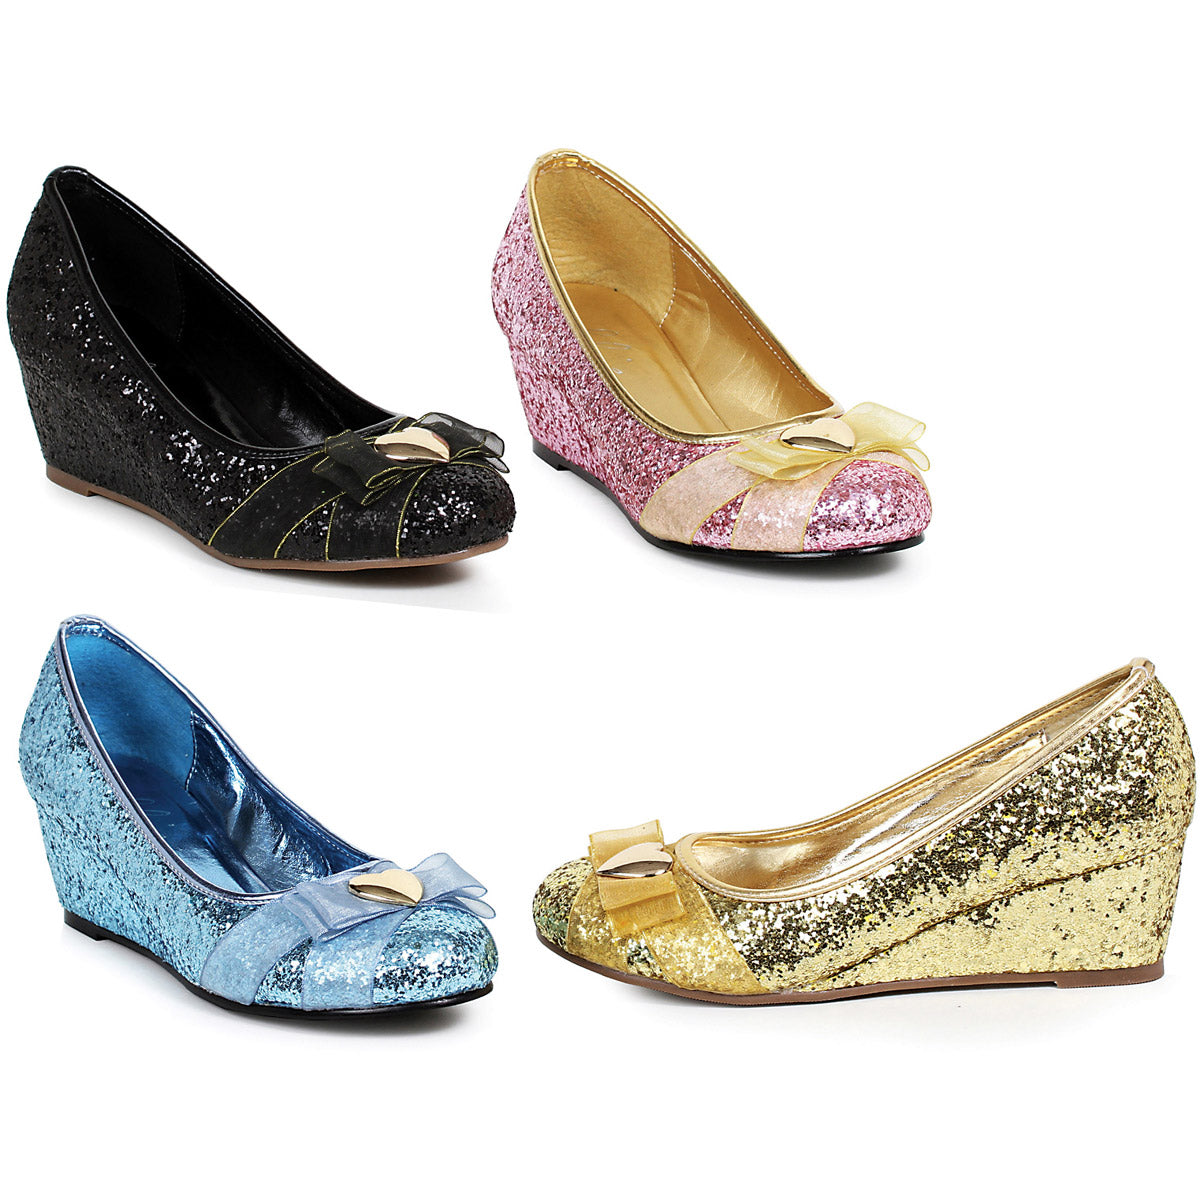 0" Heel Women's Glitter Princess Shoe with Heart d?cor Ellie  018/PRINCESS/PNKG